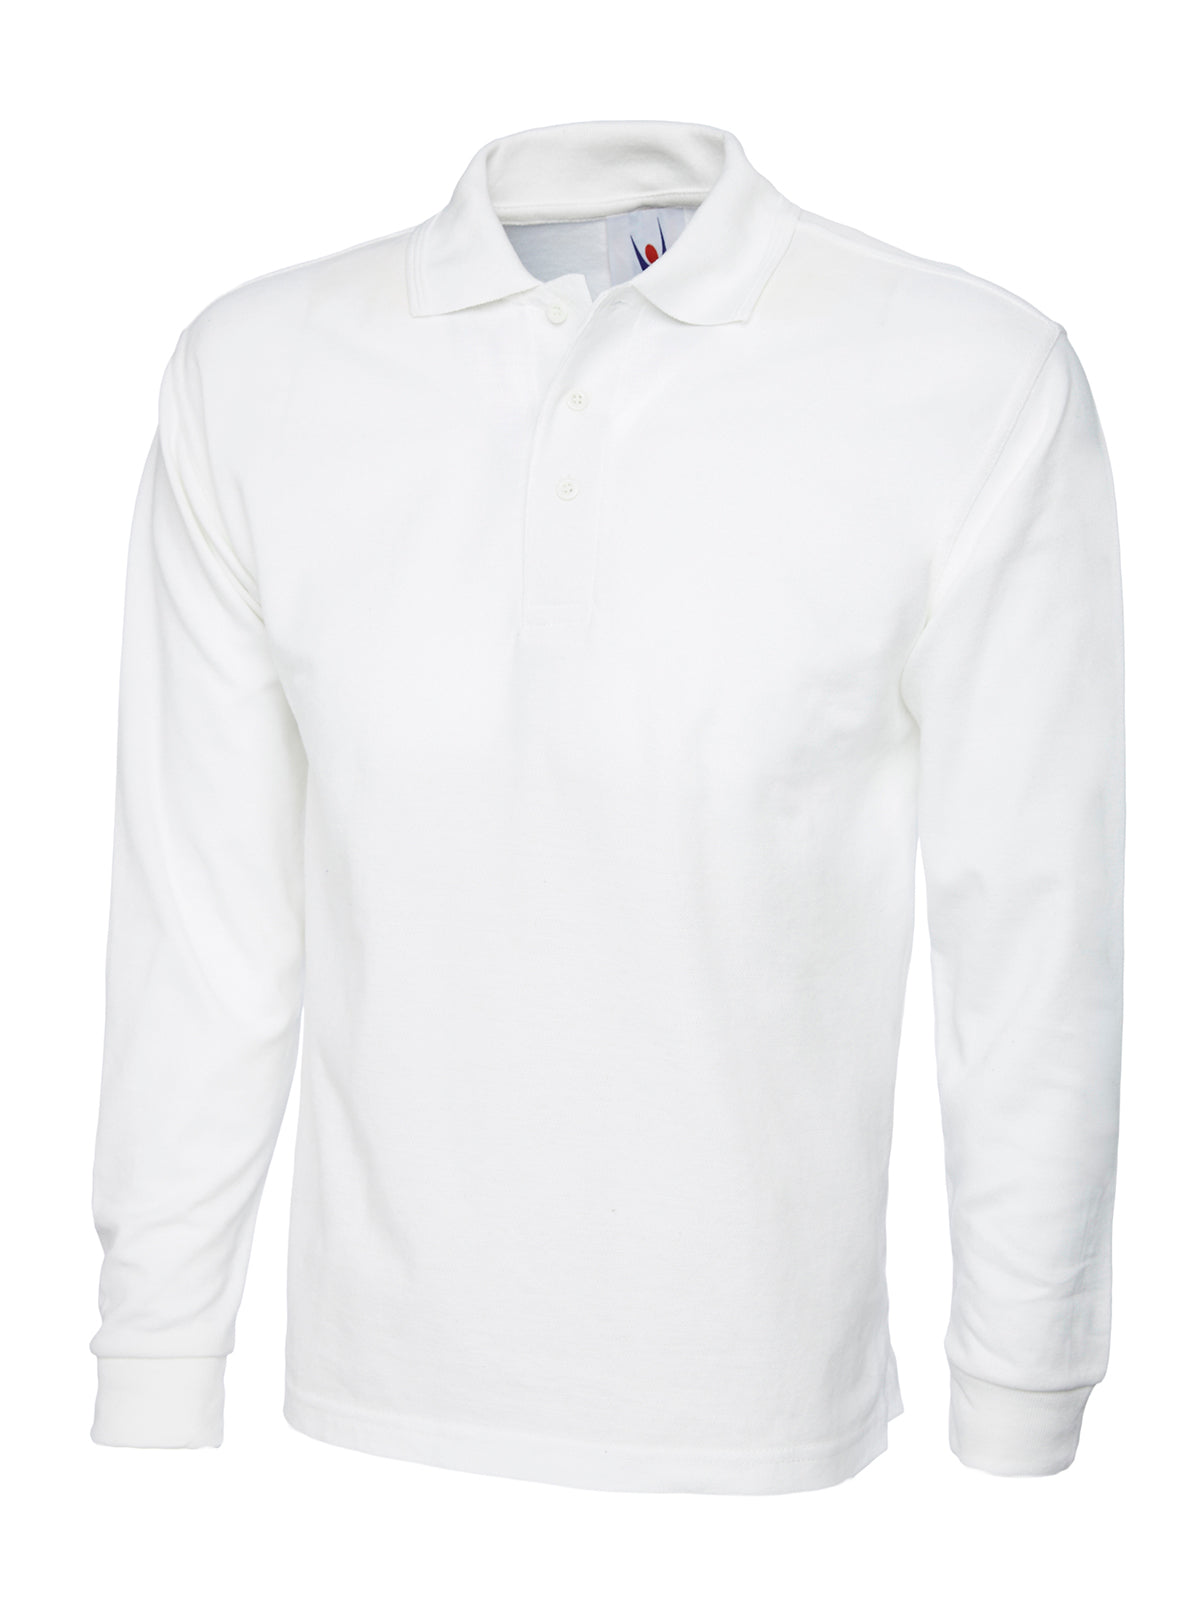 Long Sleeve Poloshirt (UC113)